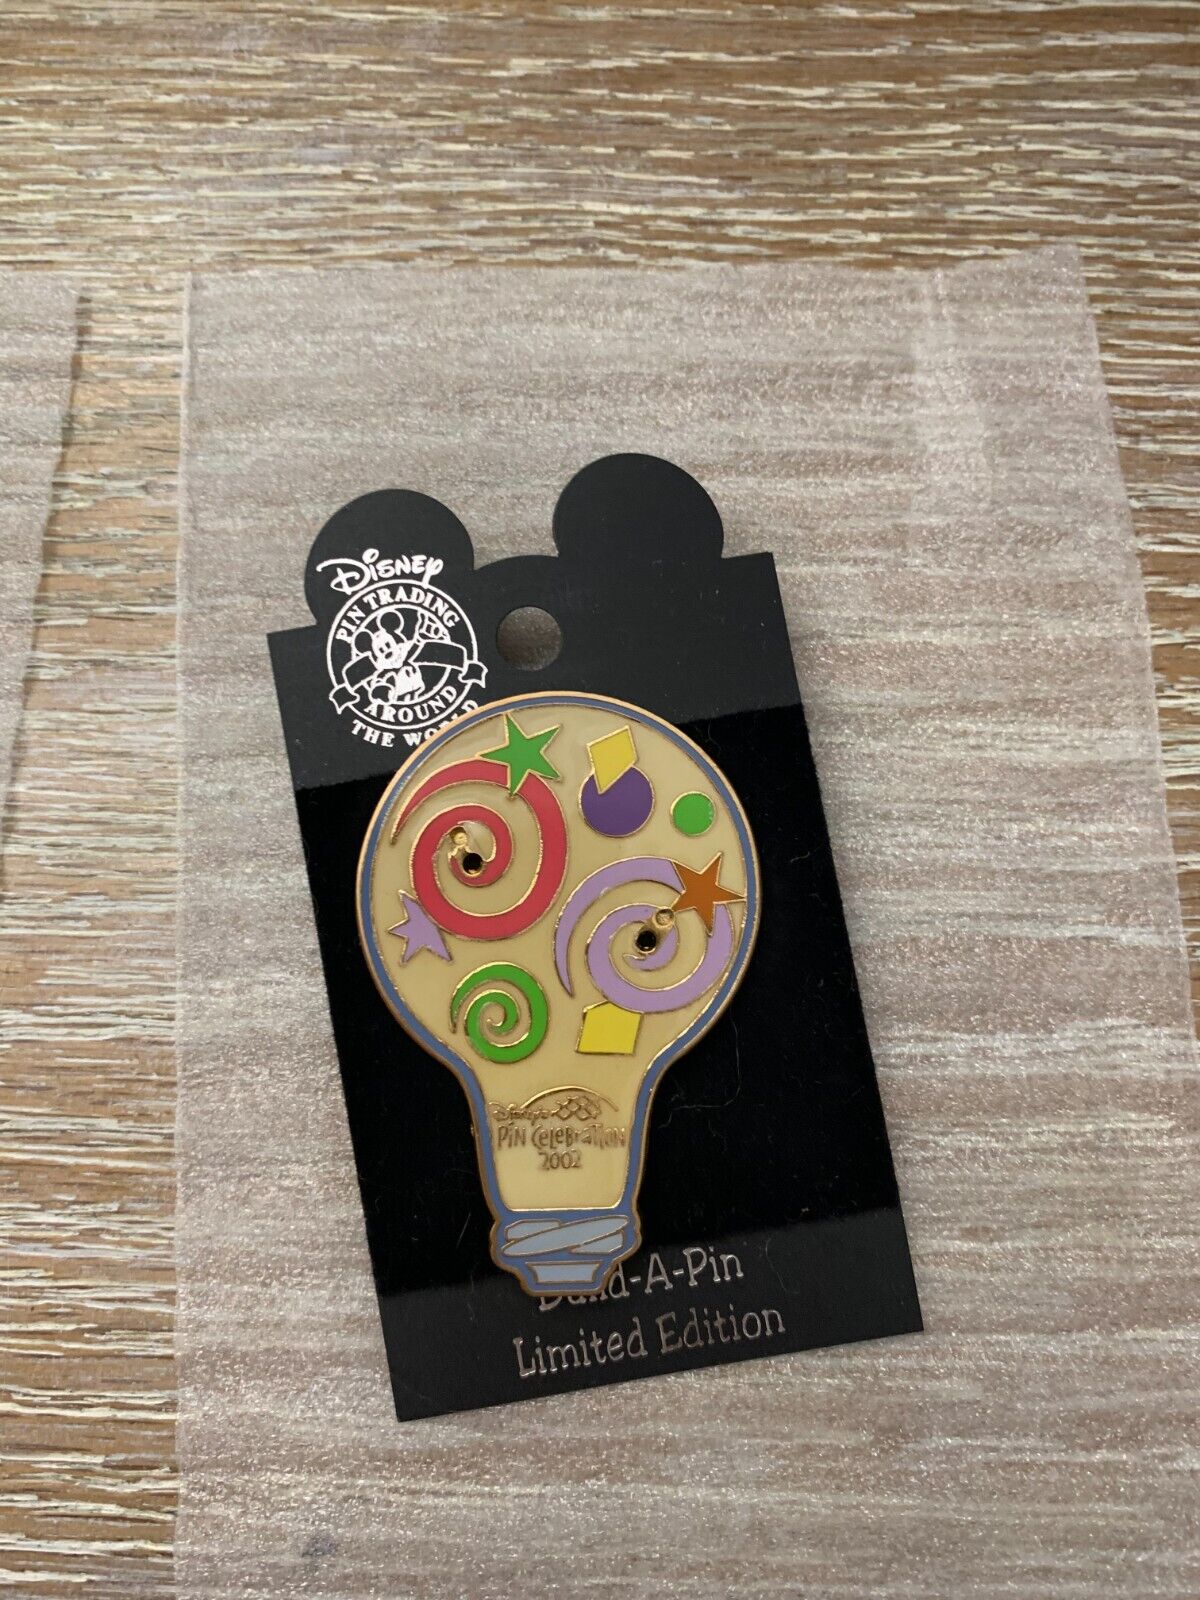 2003 Disney Build a pin Epcot's Pin Celebration Idea Bulb LE Base